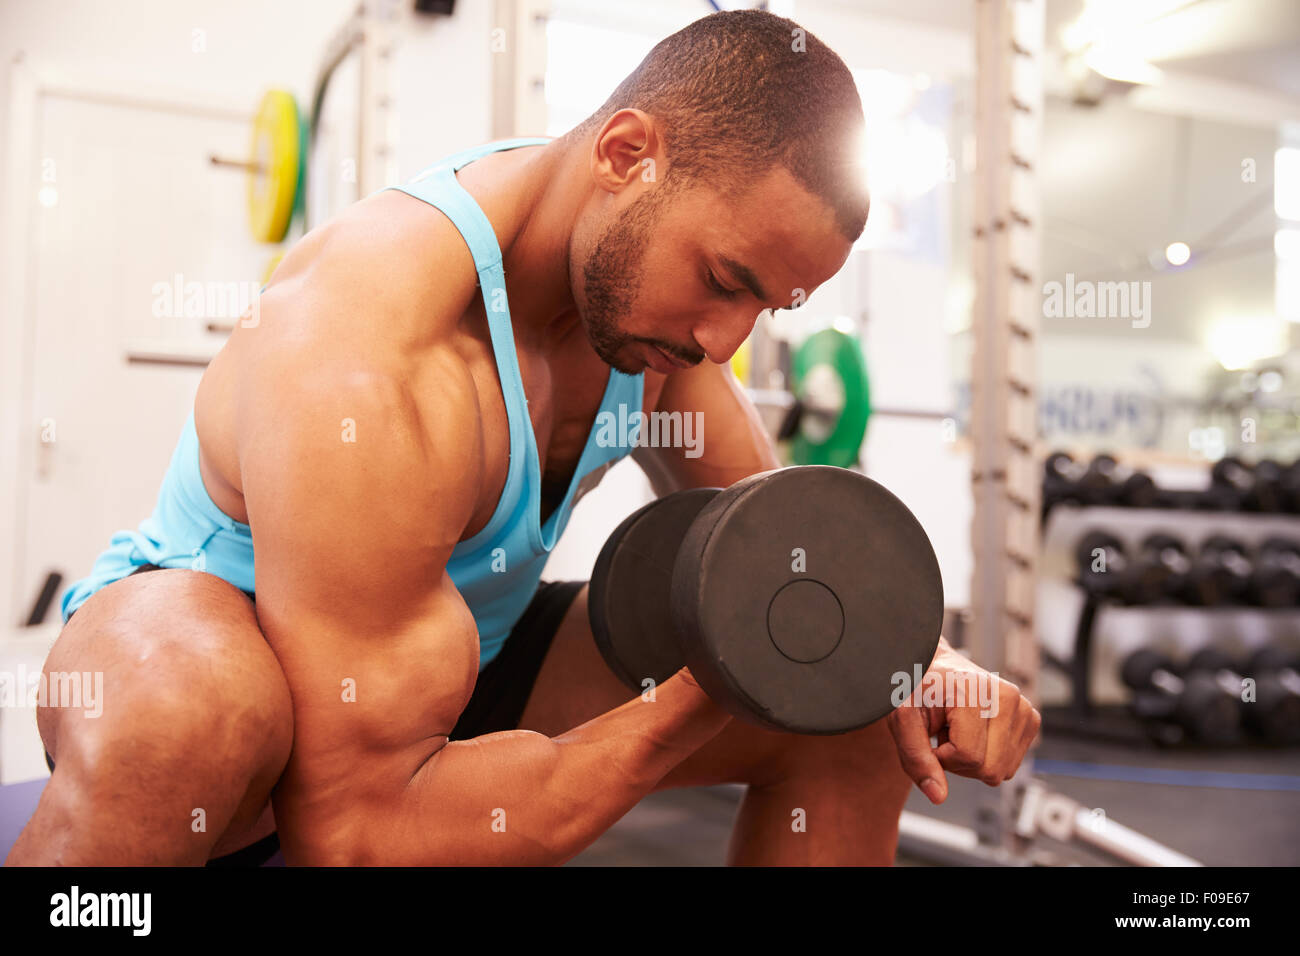 Man exercising with dumbbells at a gym, horizontal shot Stock Photo